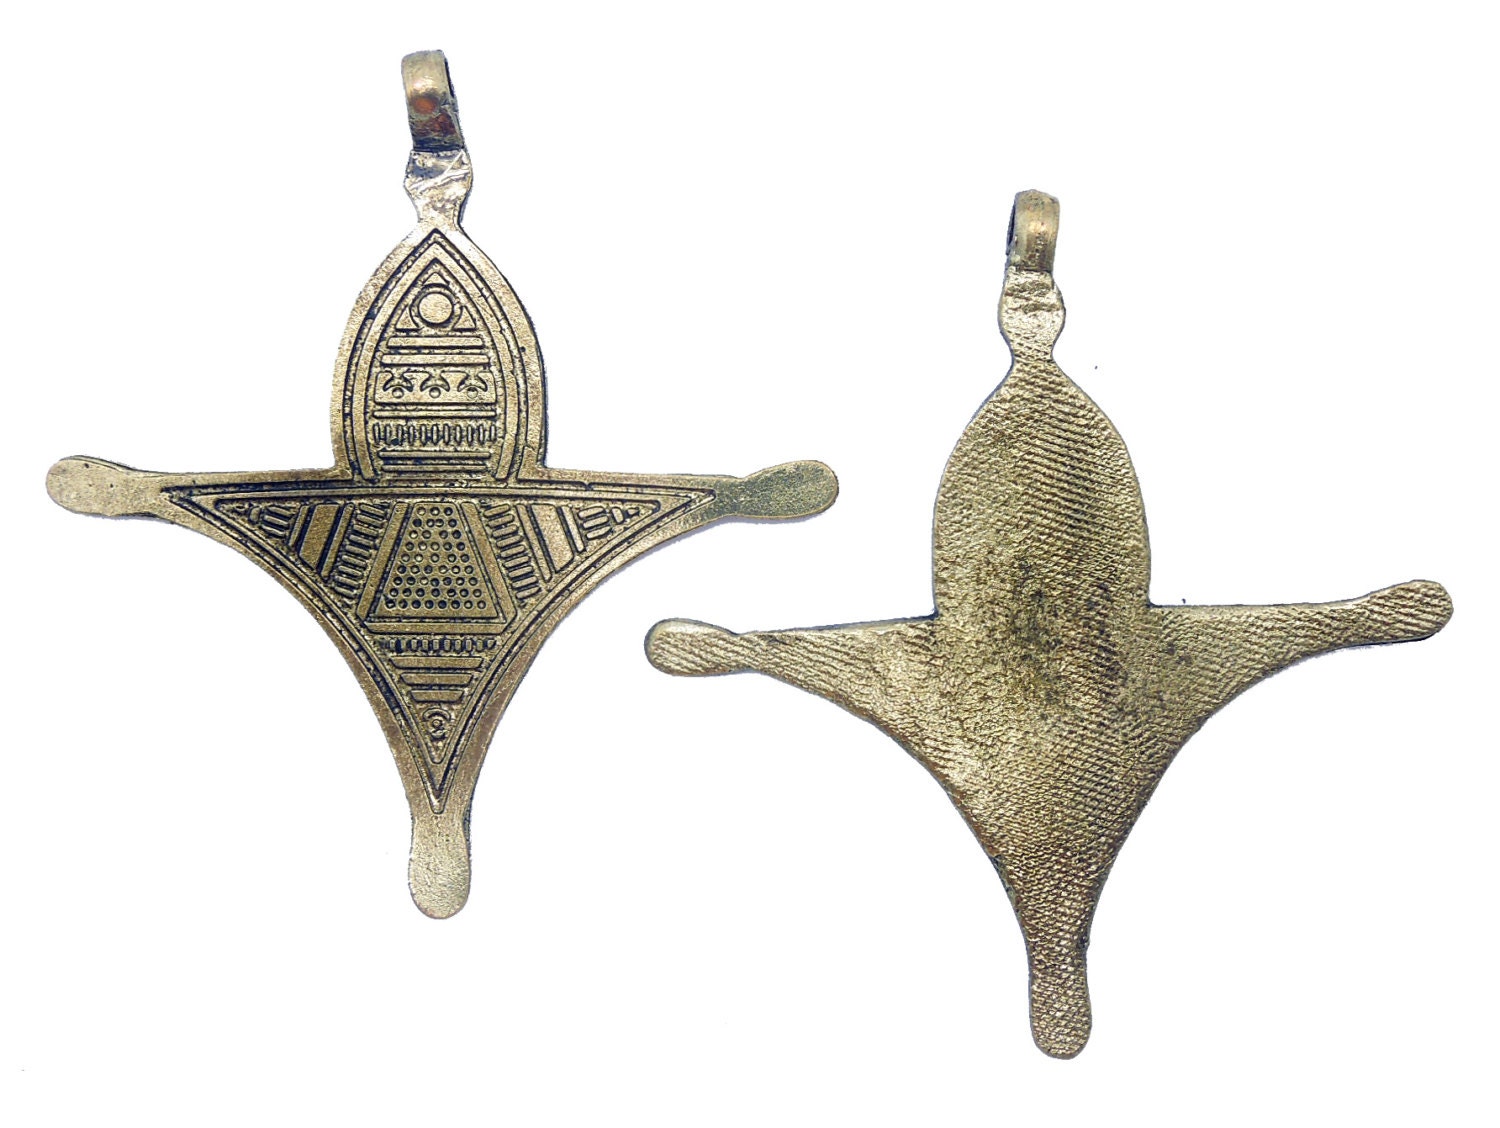 Brass Engraved Fan Pendant S58B13-02 Tibetan Brass Pendant